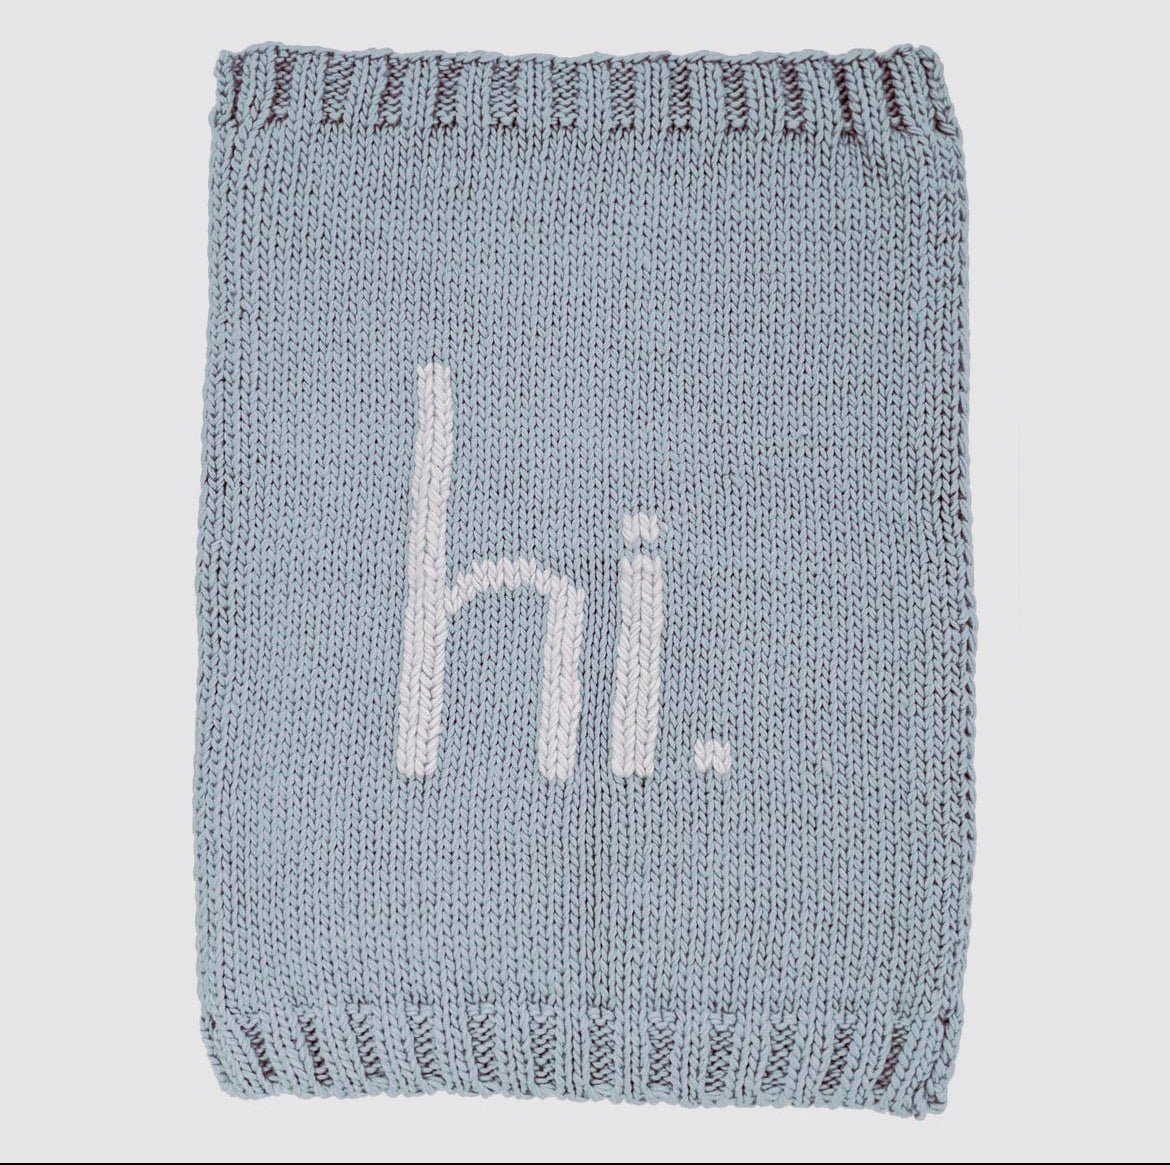 The "hi" Blanket